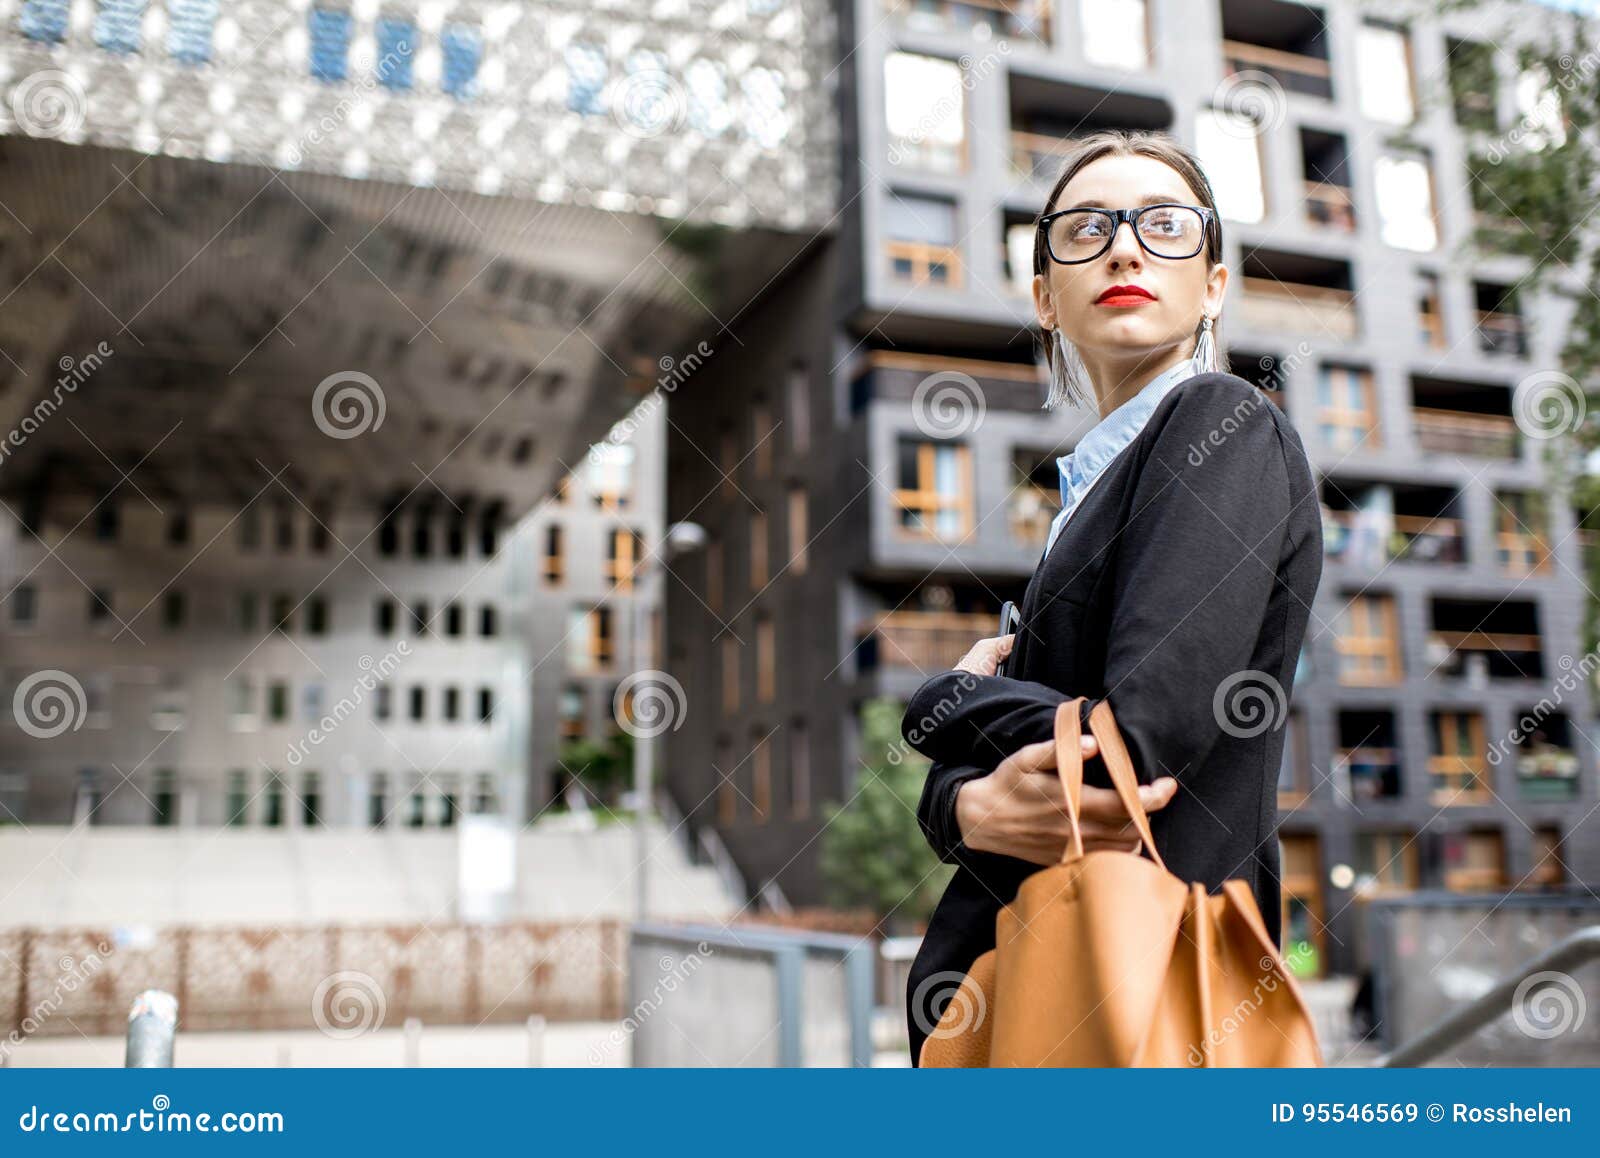 Portrait of a Businesswoman Outdoors Stock Image - Image of portrait ...